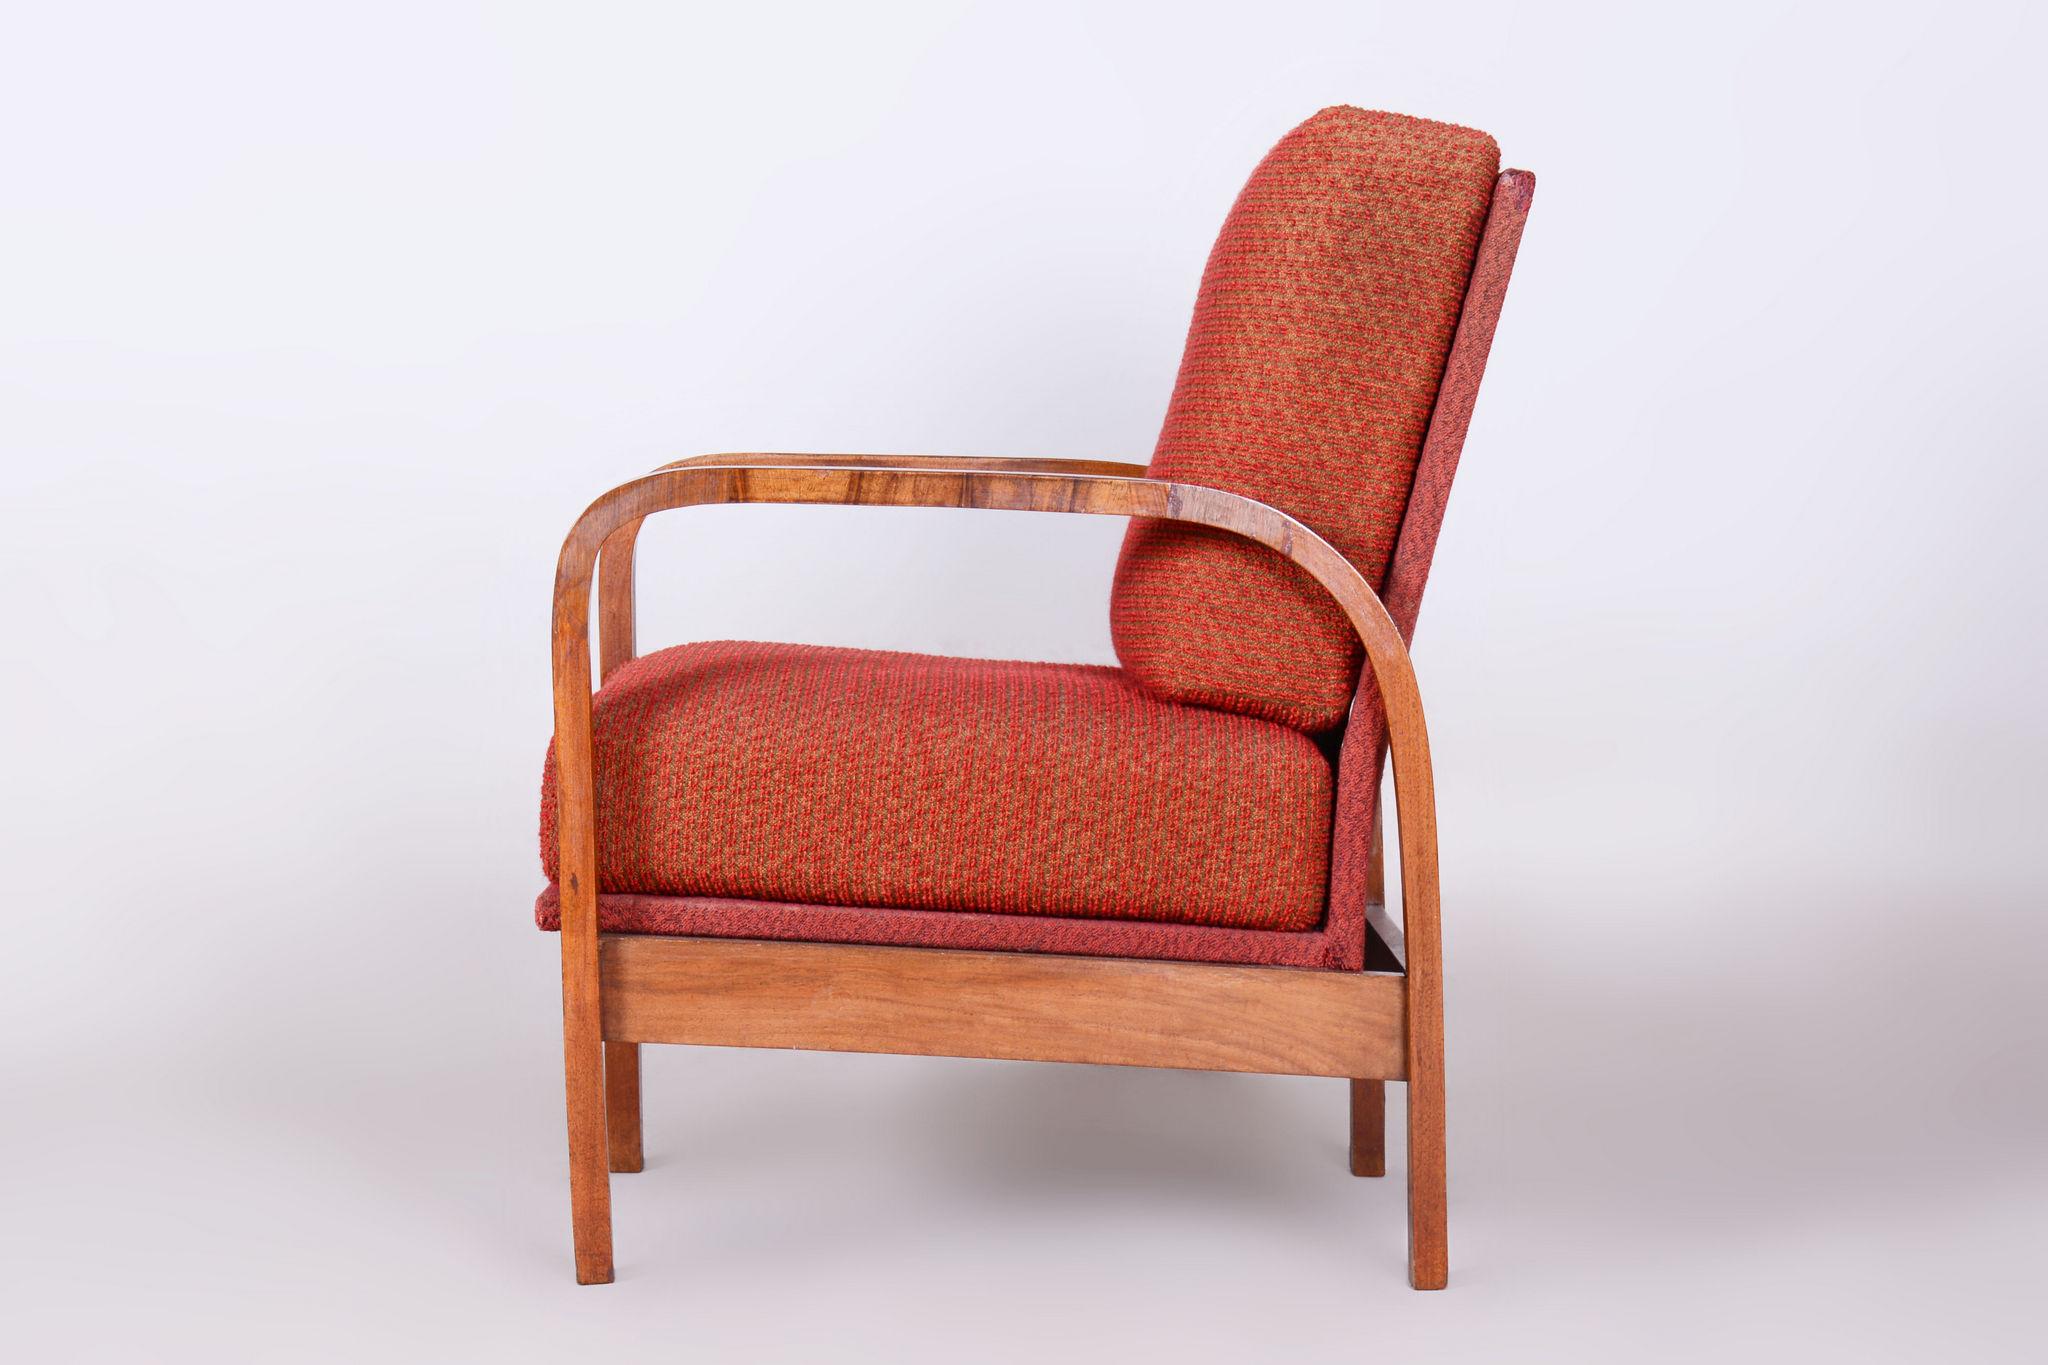 Restored Art Deco Armchair, Original Upholstery, Walnut, Veneer, Czech, 1930s For Sale 1